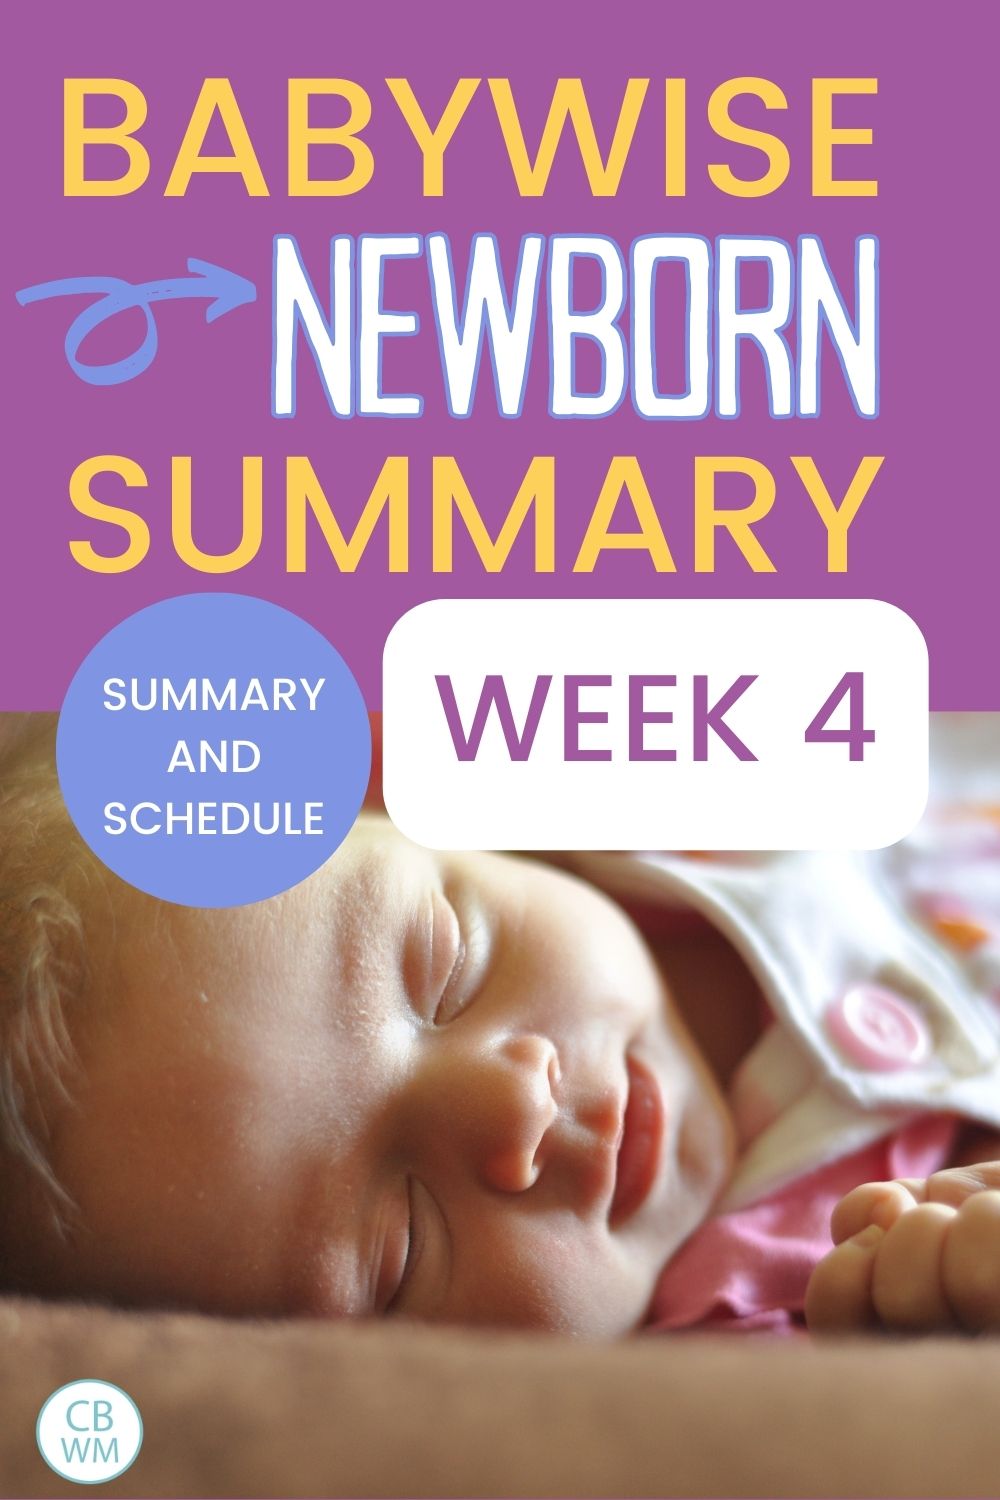 Babywise newborn summary week 4 pinnable image